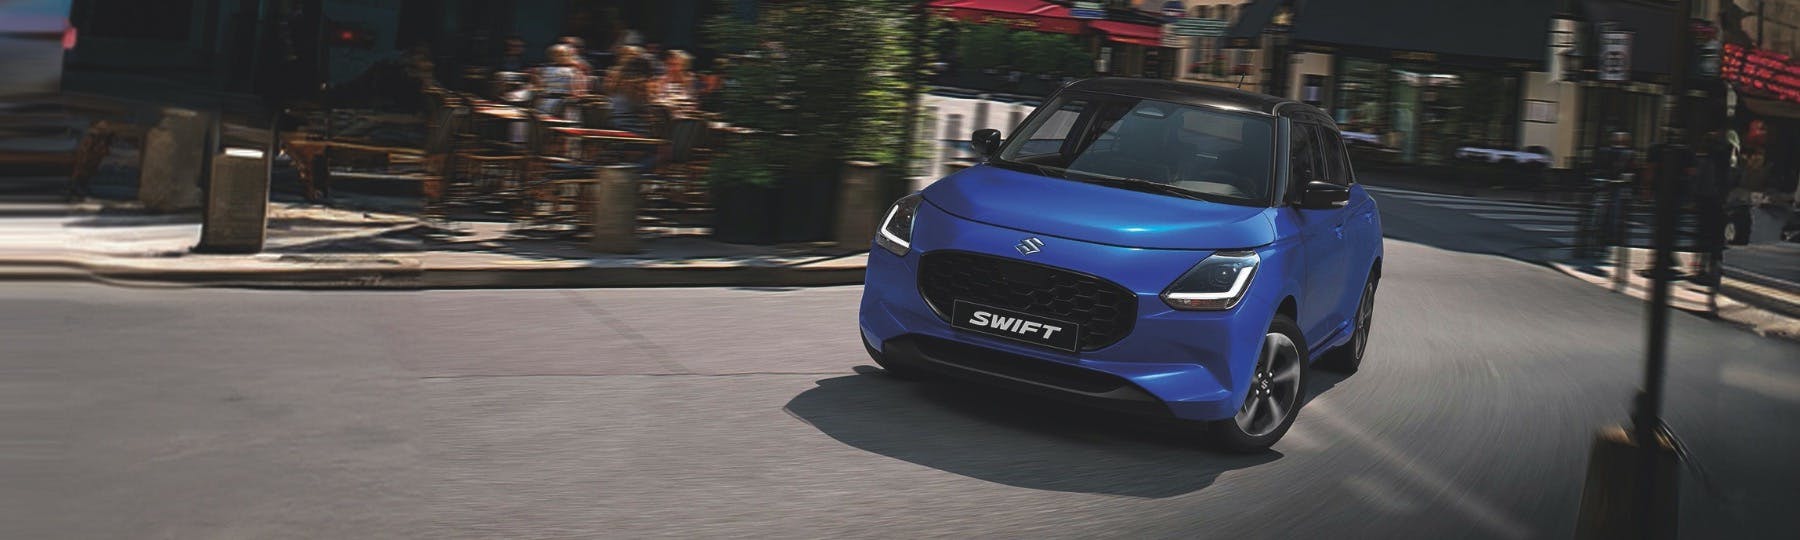 New Suzuki Swift New Car Offer